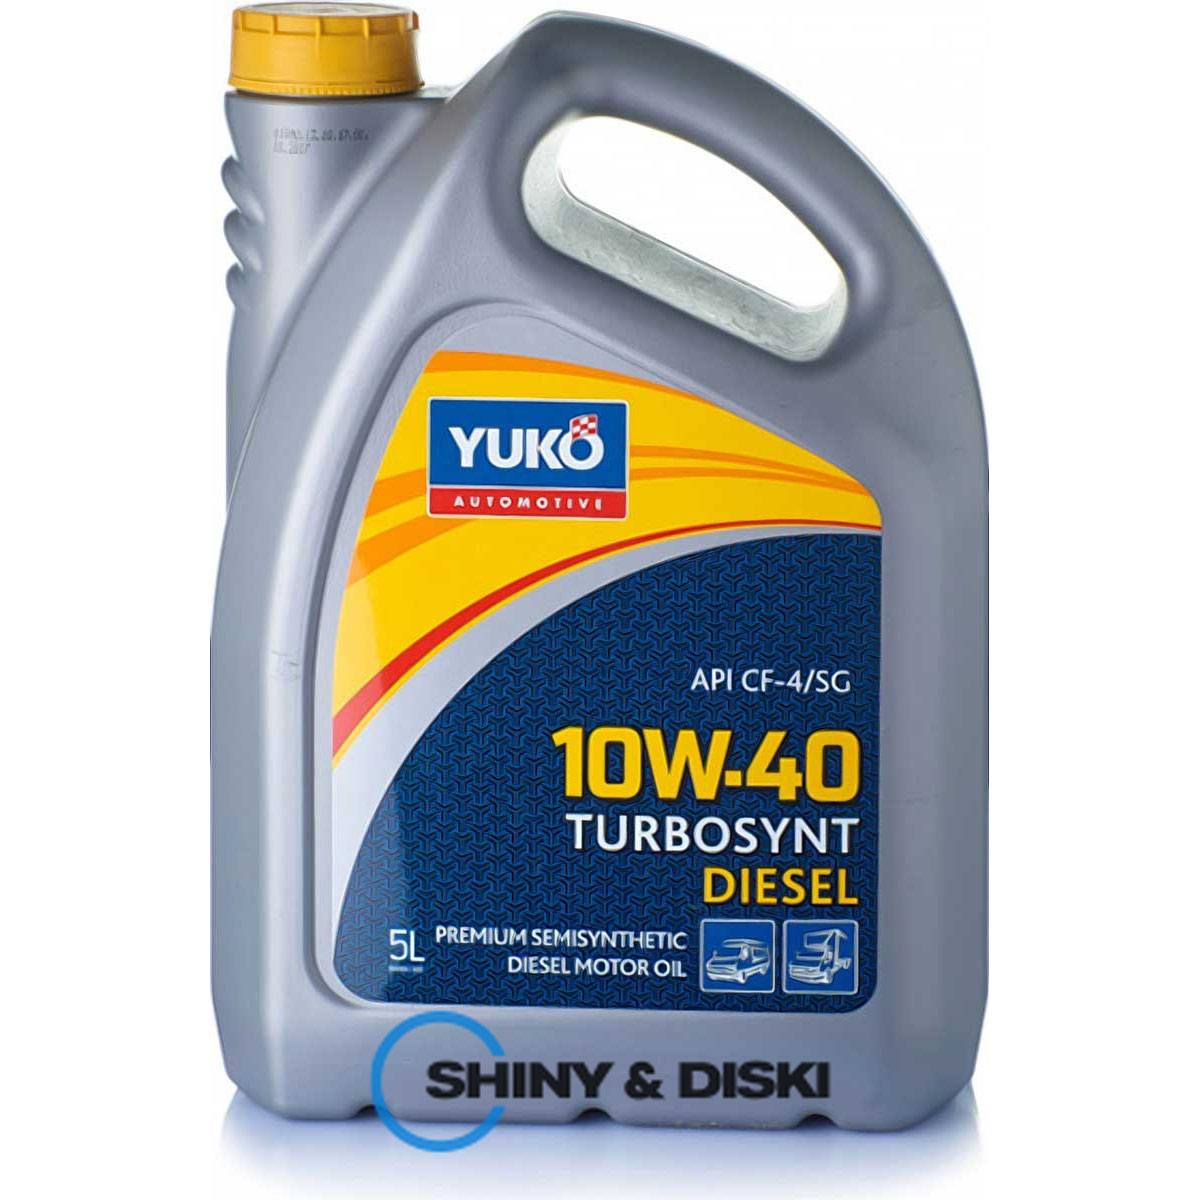 yuko turbosynt diesel 10w-40 (5л)